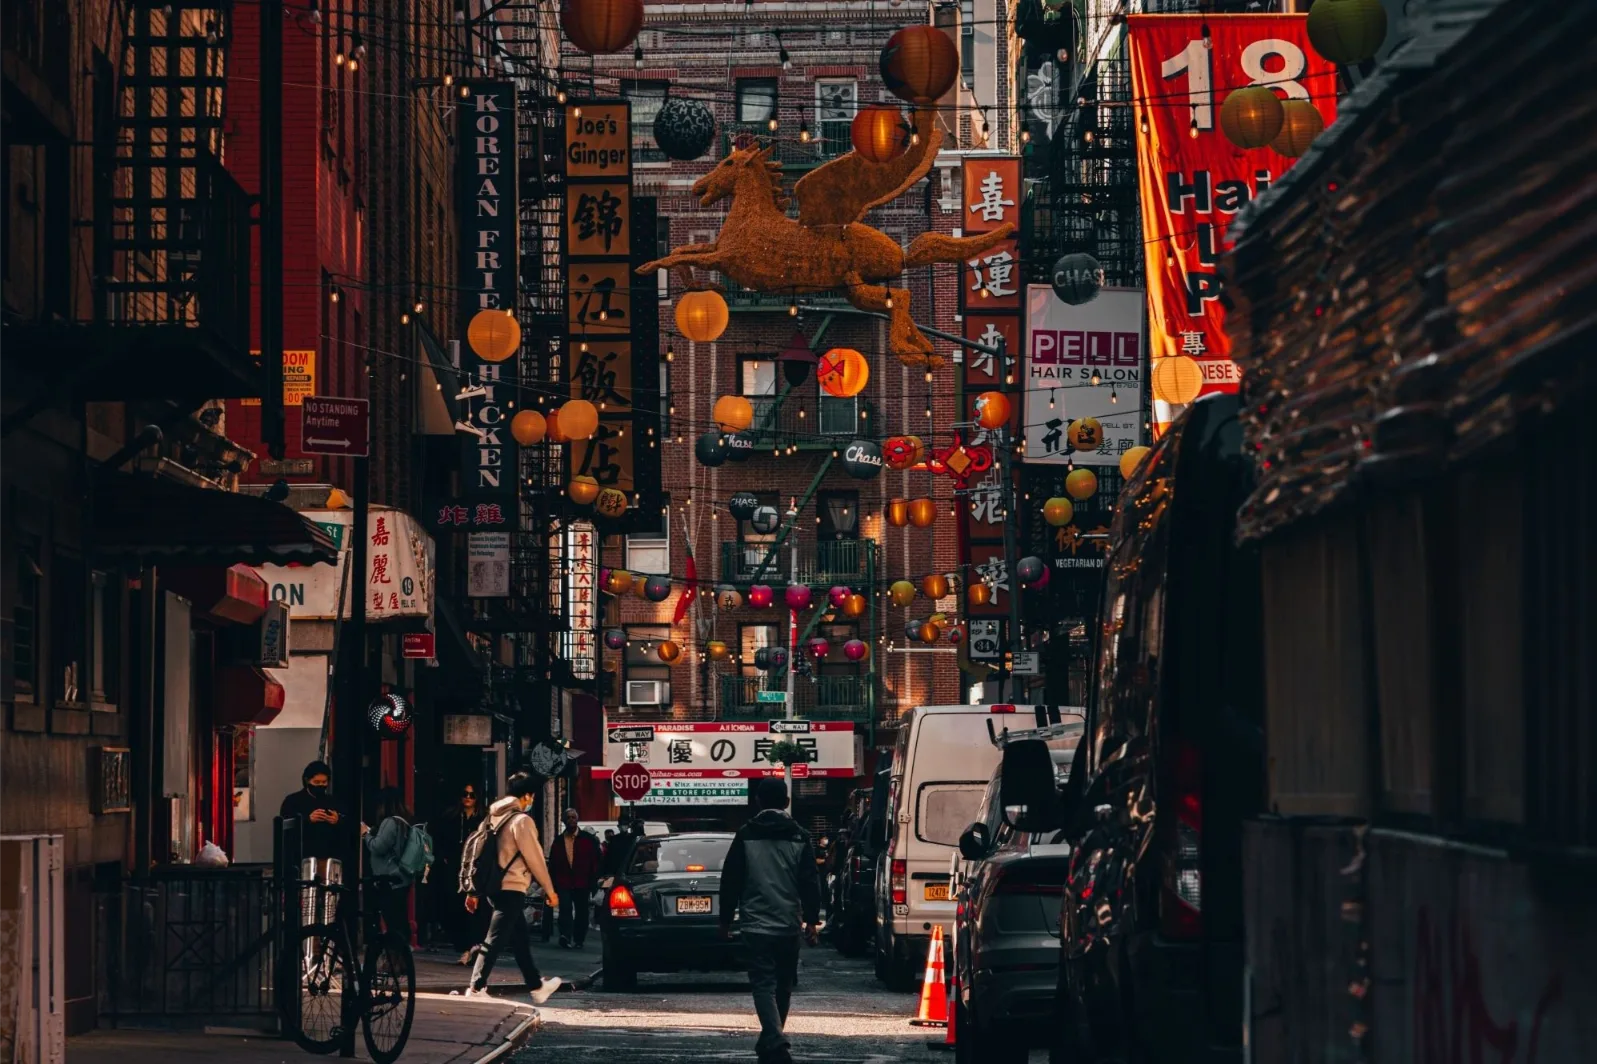 Street Photo of People Waking around Decorated Chinatown in New York City